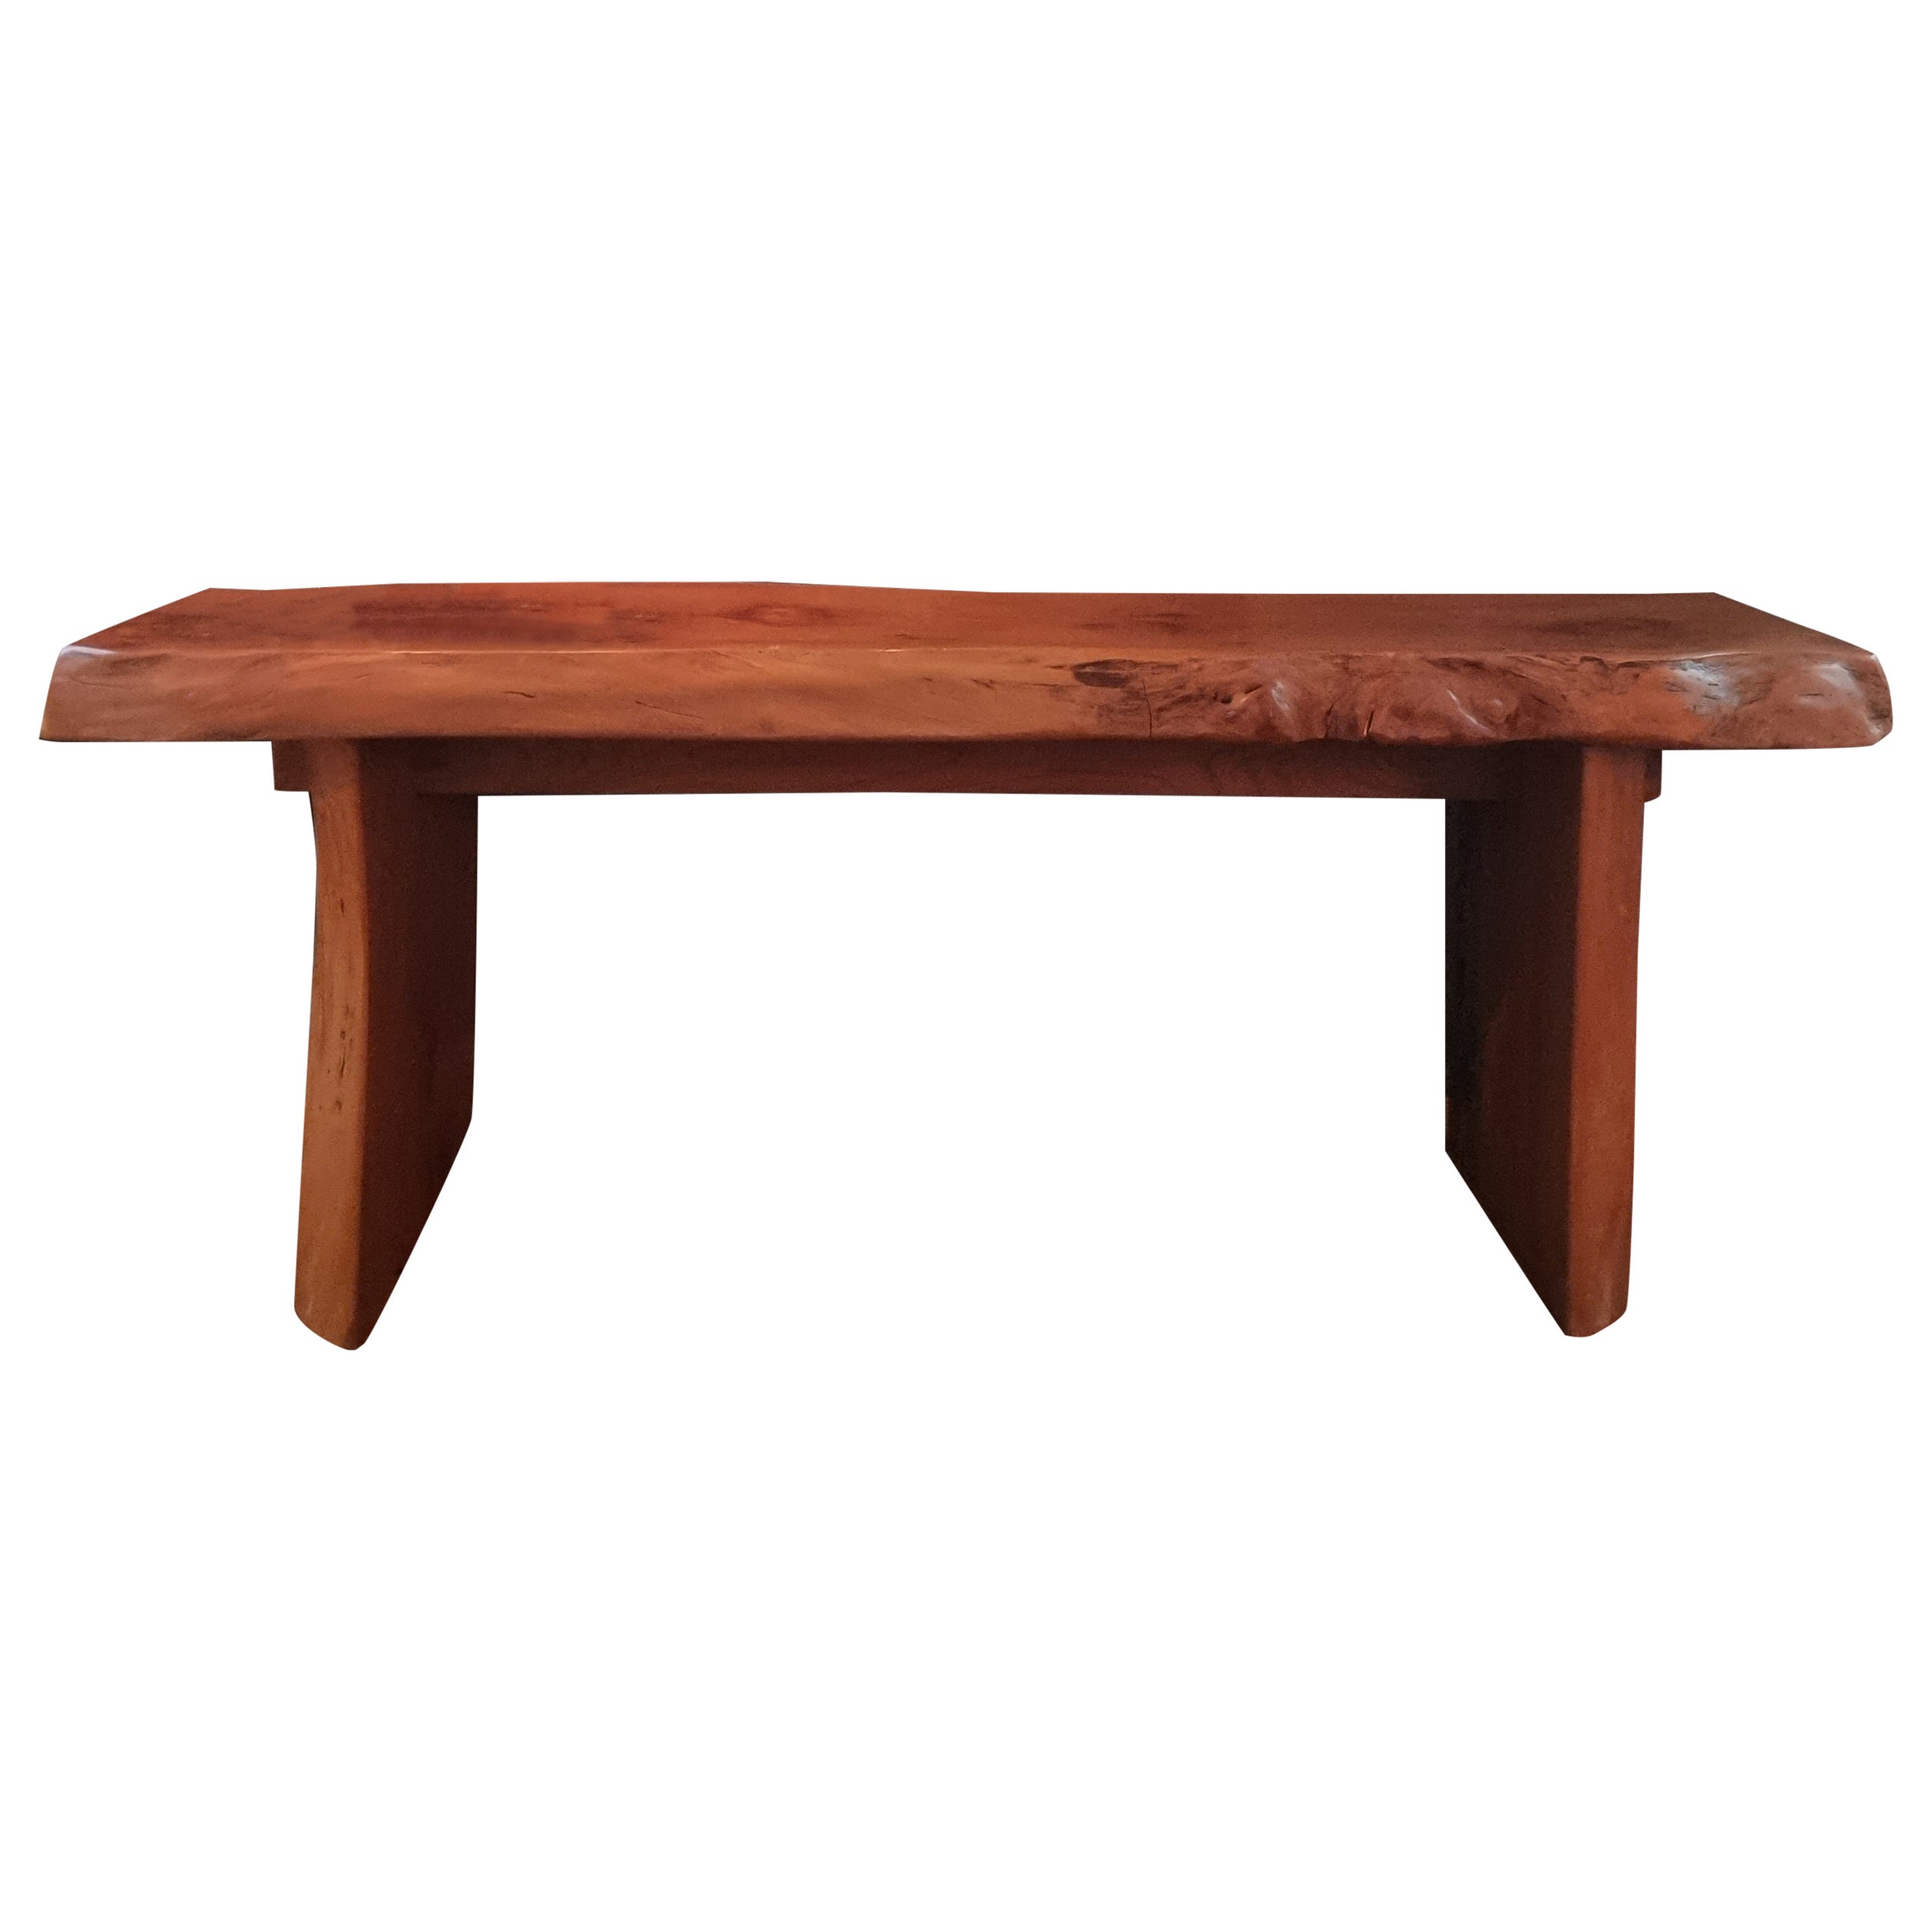 Rustic Bench/Table in Elm by Sigvard Nilsson, Söwe Konst, Scandinavian Modern For Sale